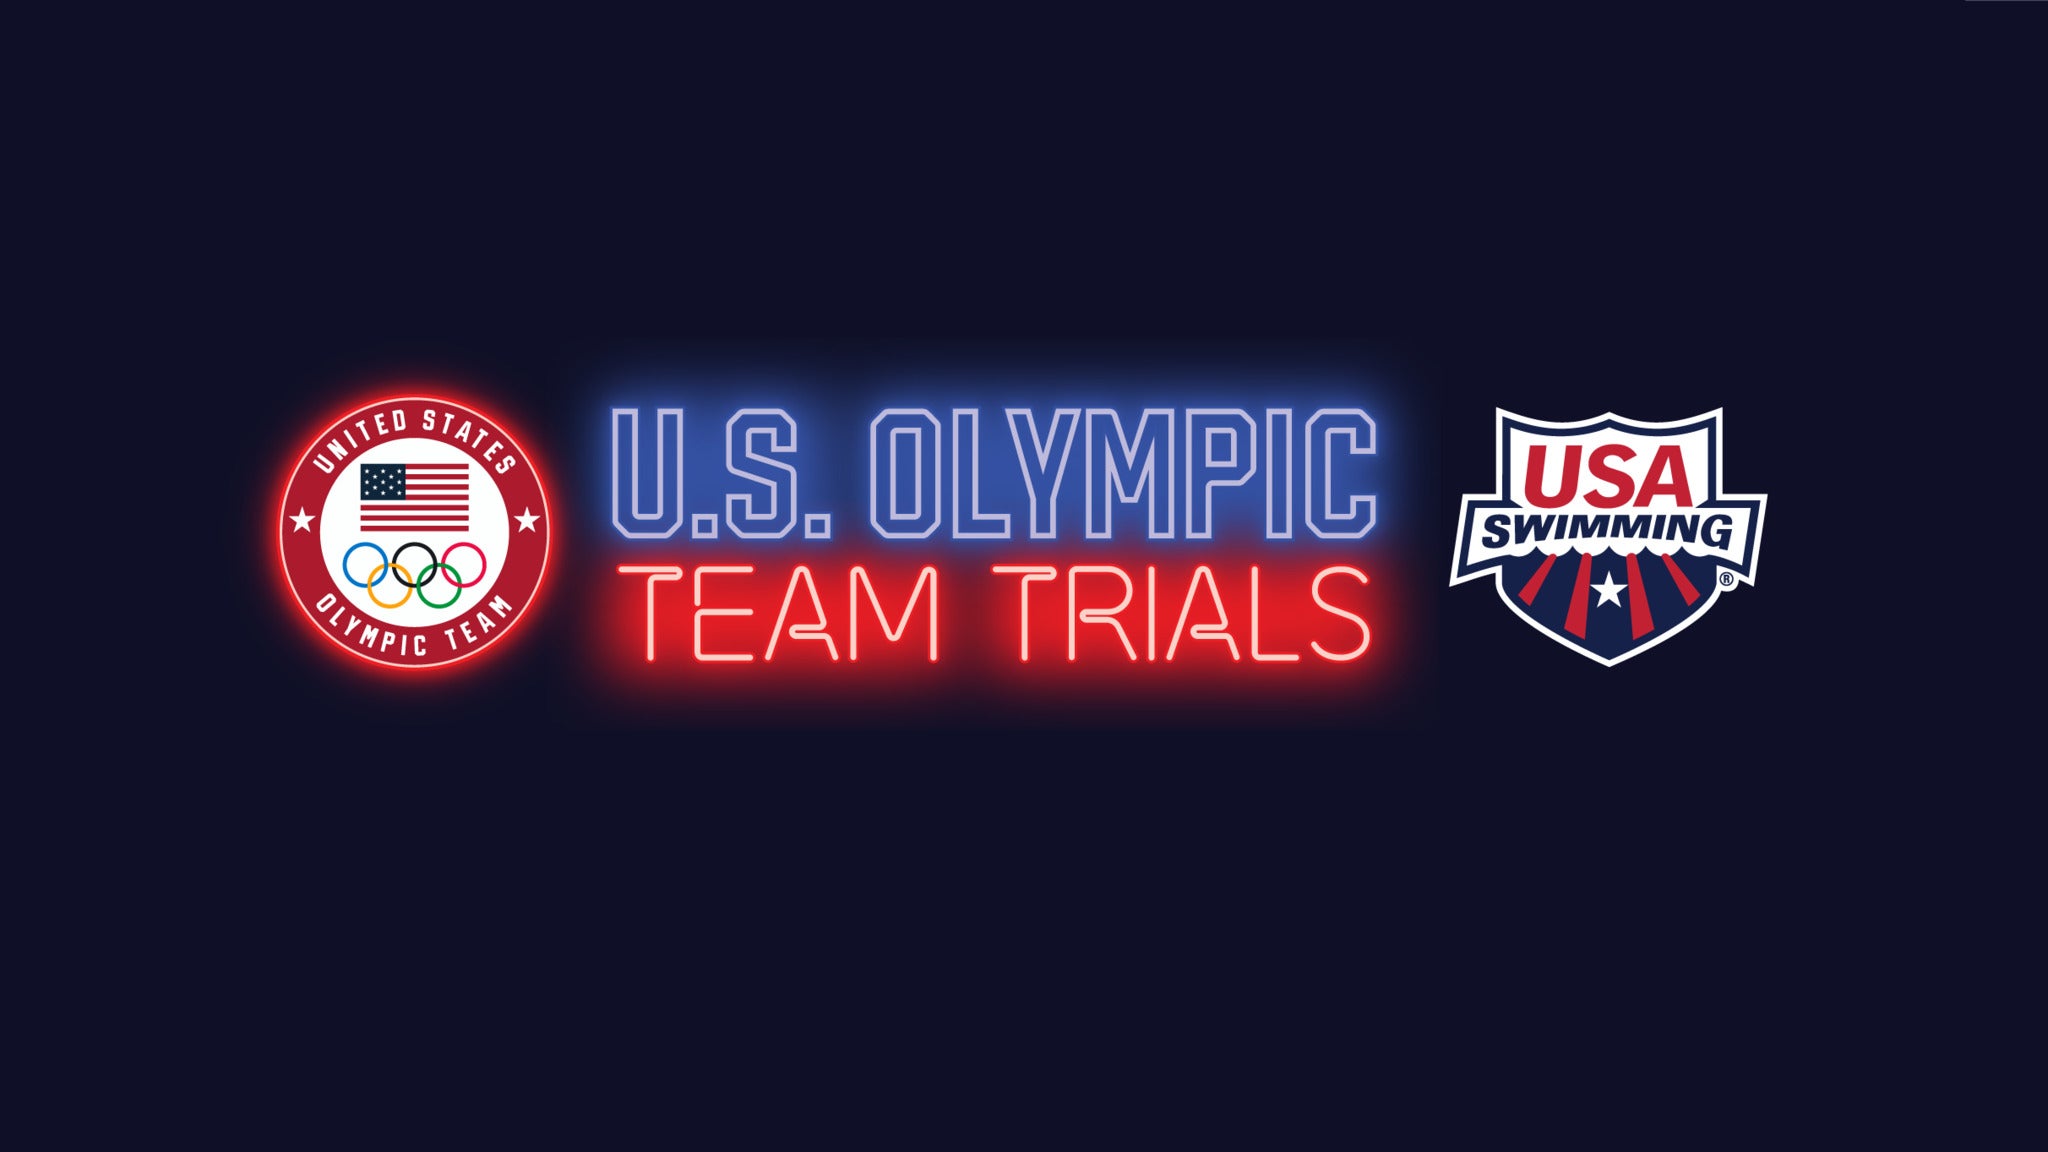 U.S. Olympic Team Trials - Swimming presale information on freepresalepasswords.com